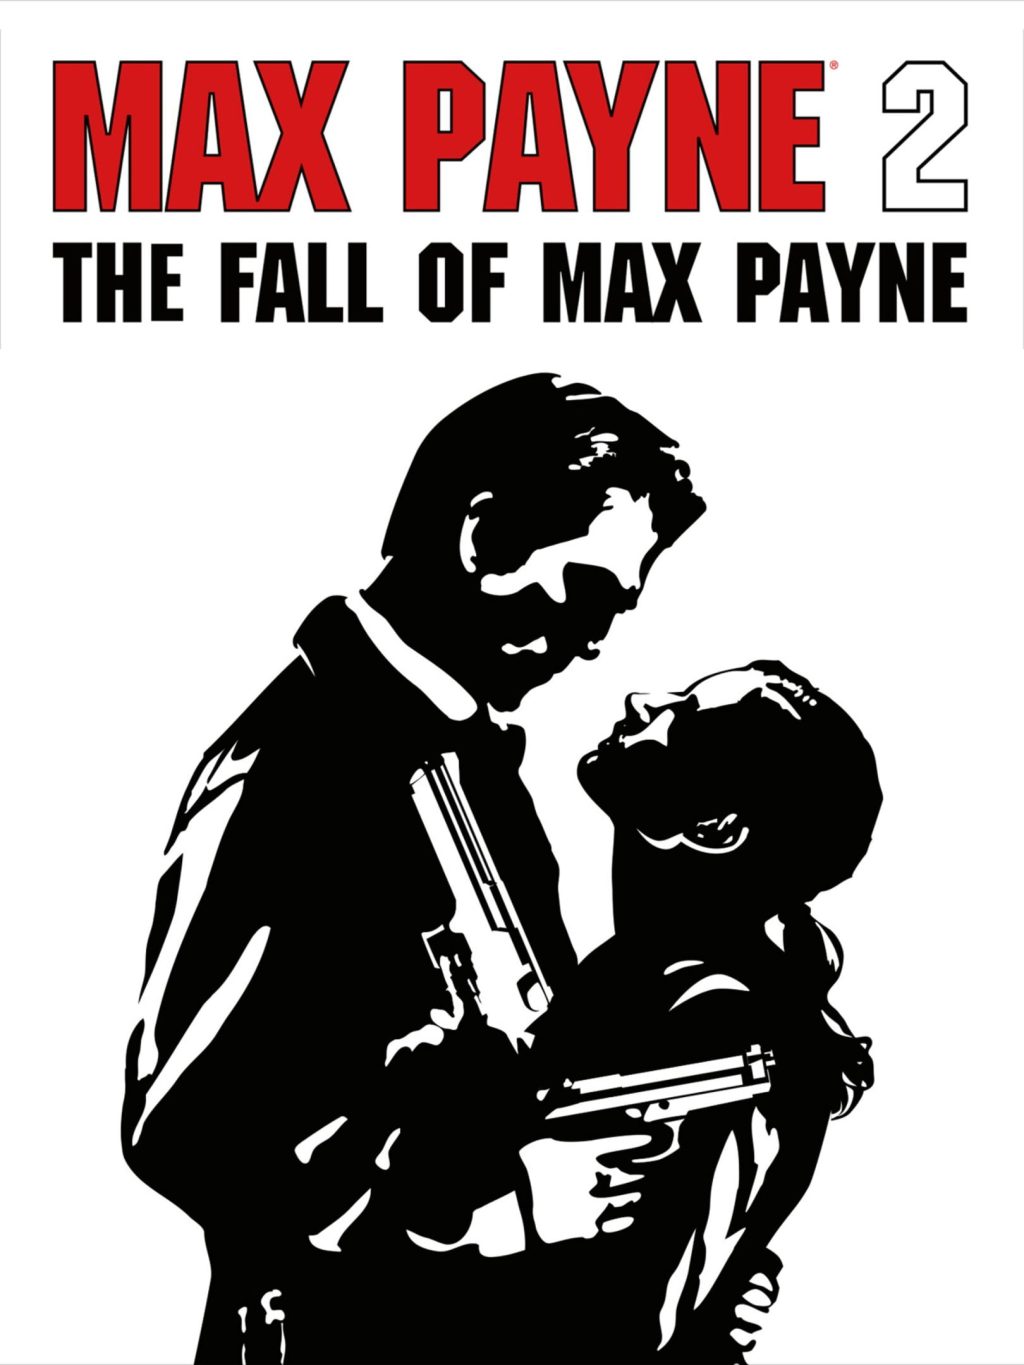 Max Payne 2 The Fall Of Max Payne C PS2